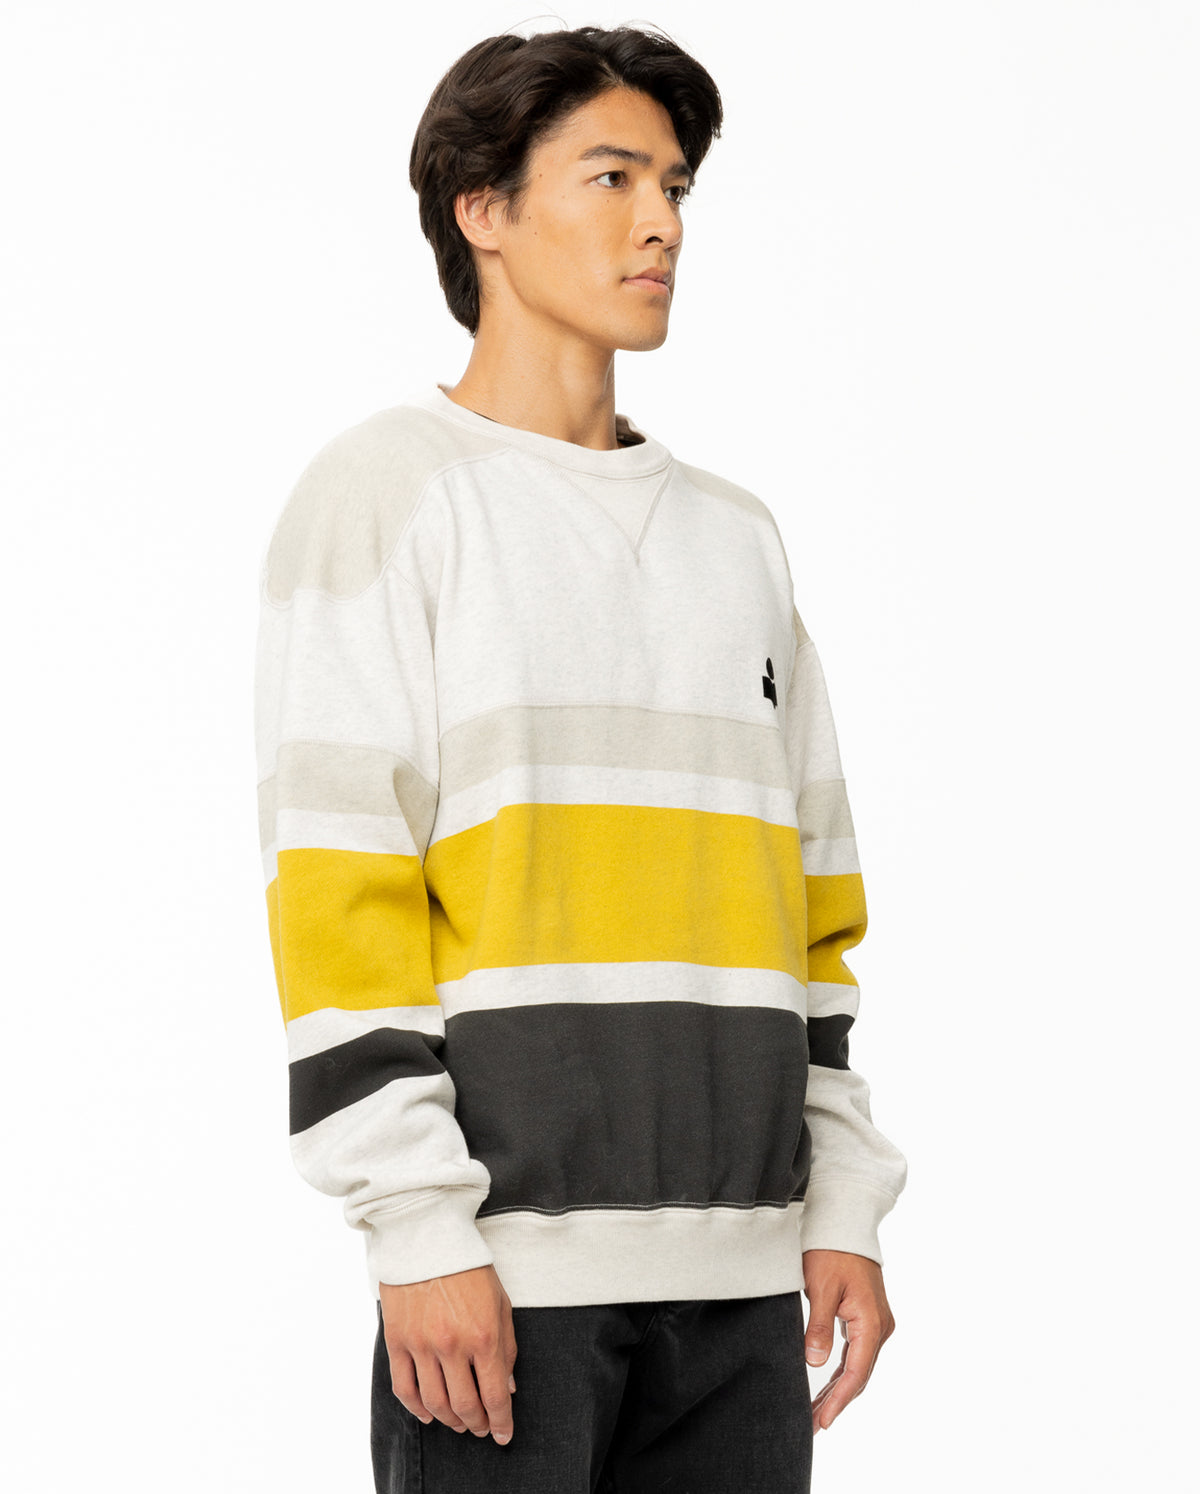 Meyoan Rugby Striped Sweatshirt - Ecru Yellow